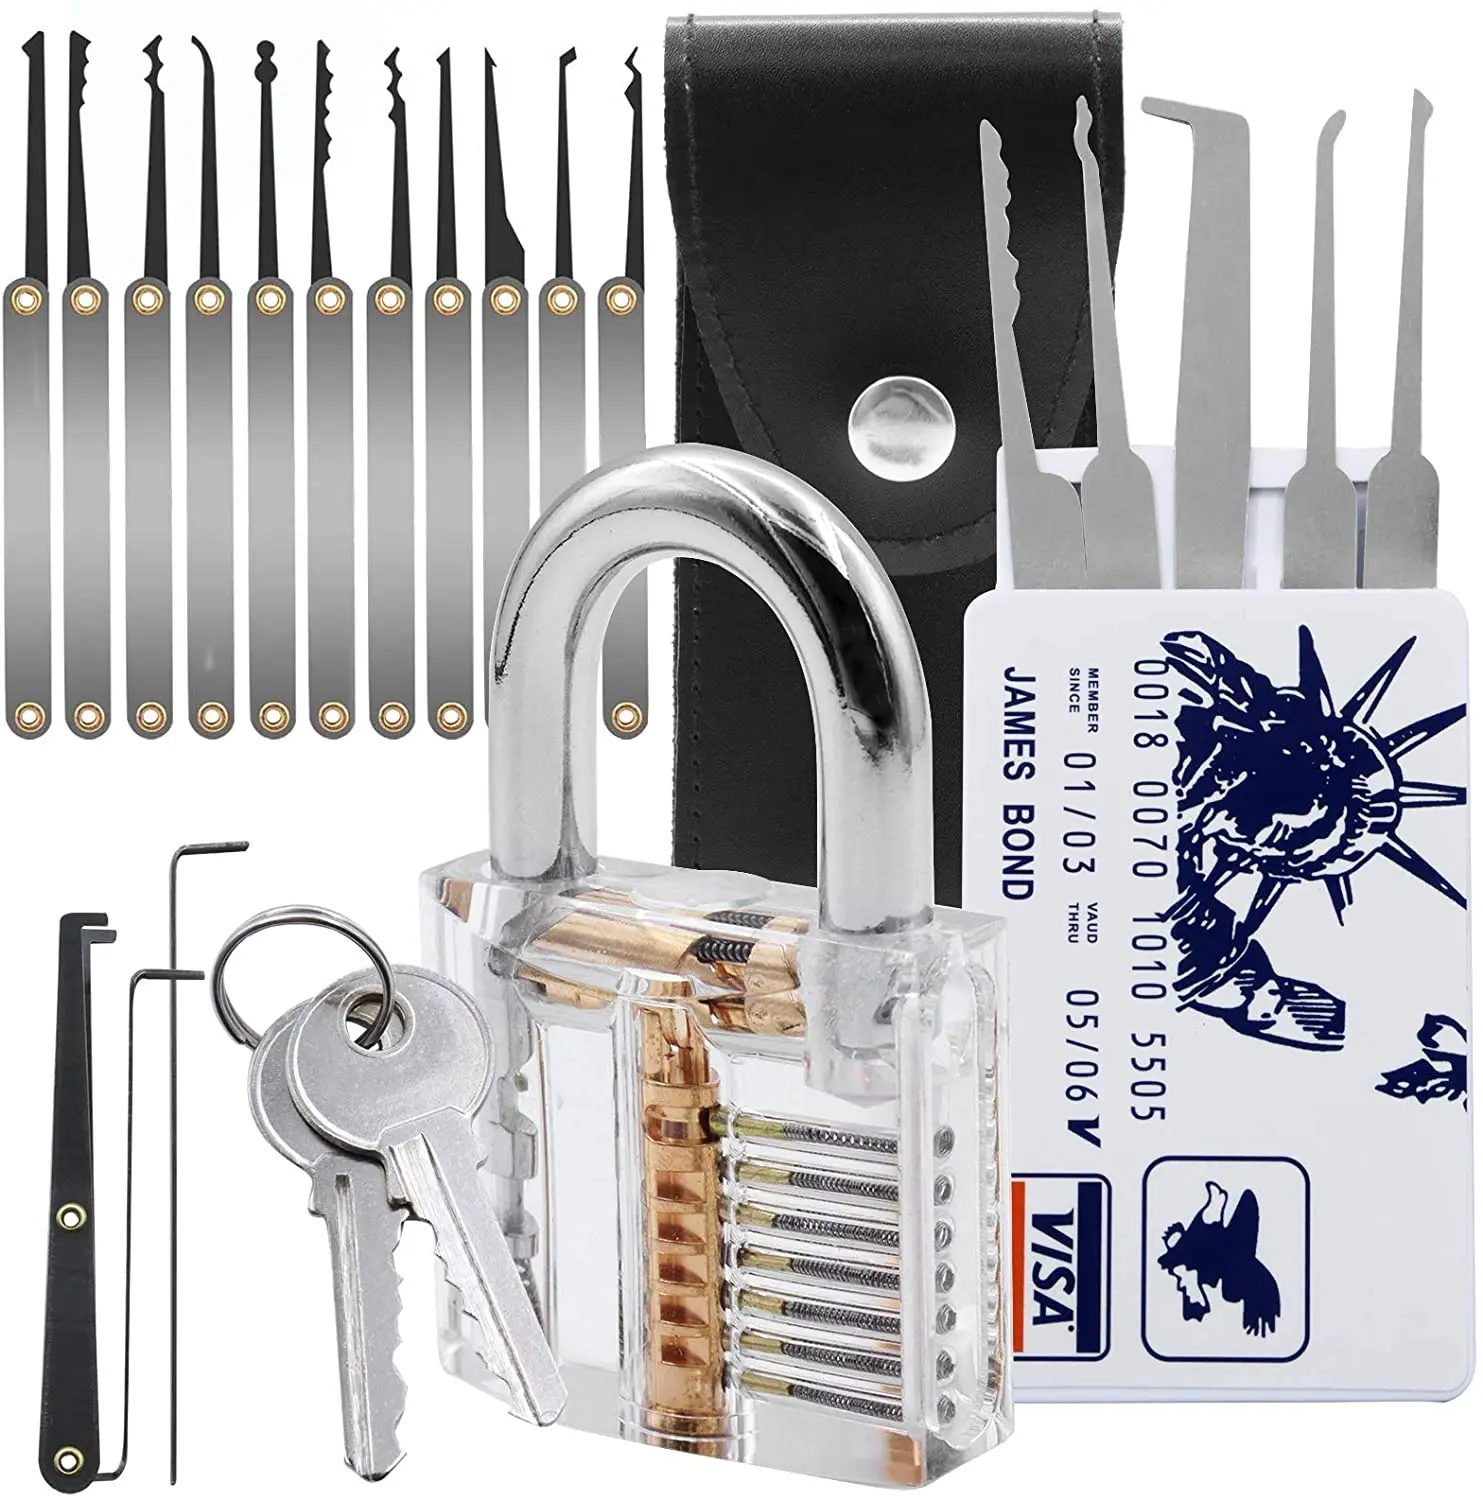 

15pcs Lock Picking Set with Transparent Training Locks and Credit Card Lock Pick Tool Kit for Beginner and Pro Locksmiths